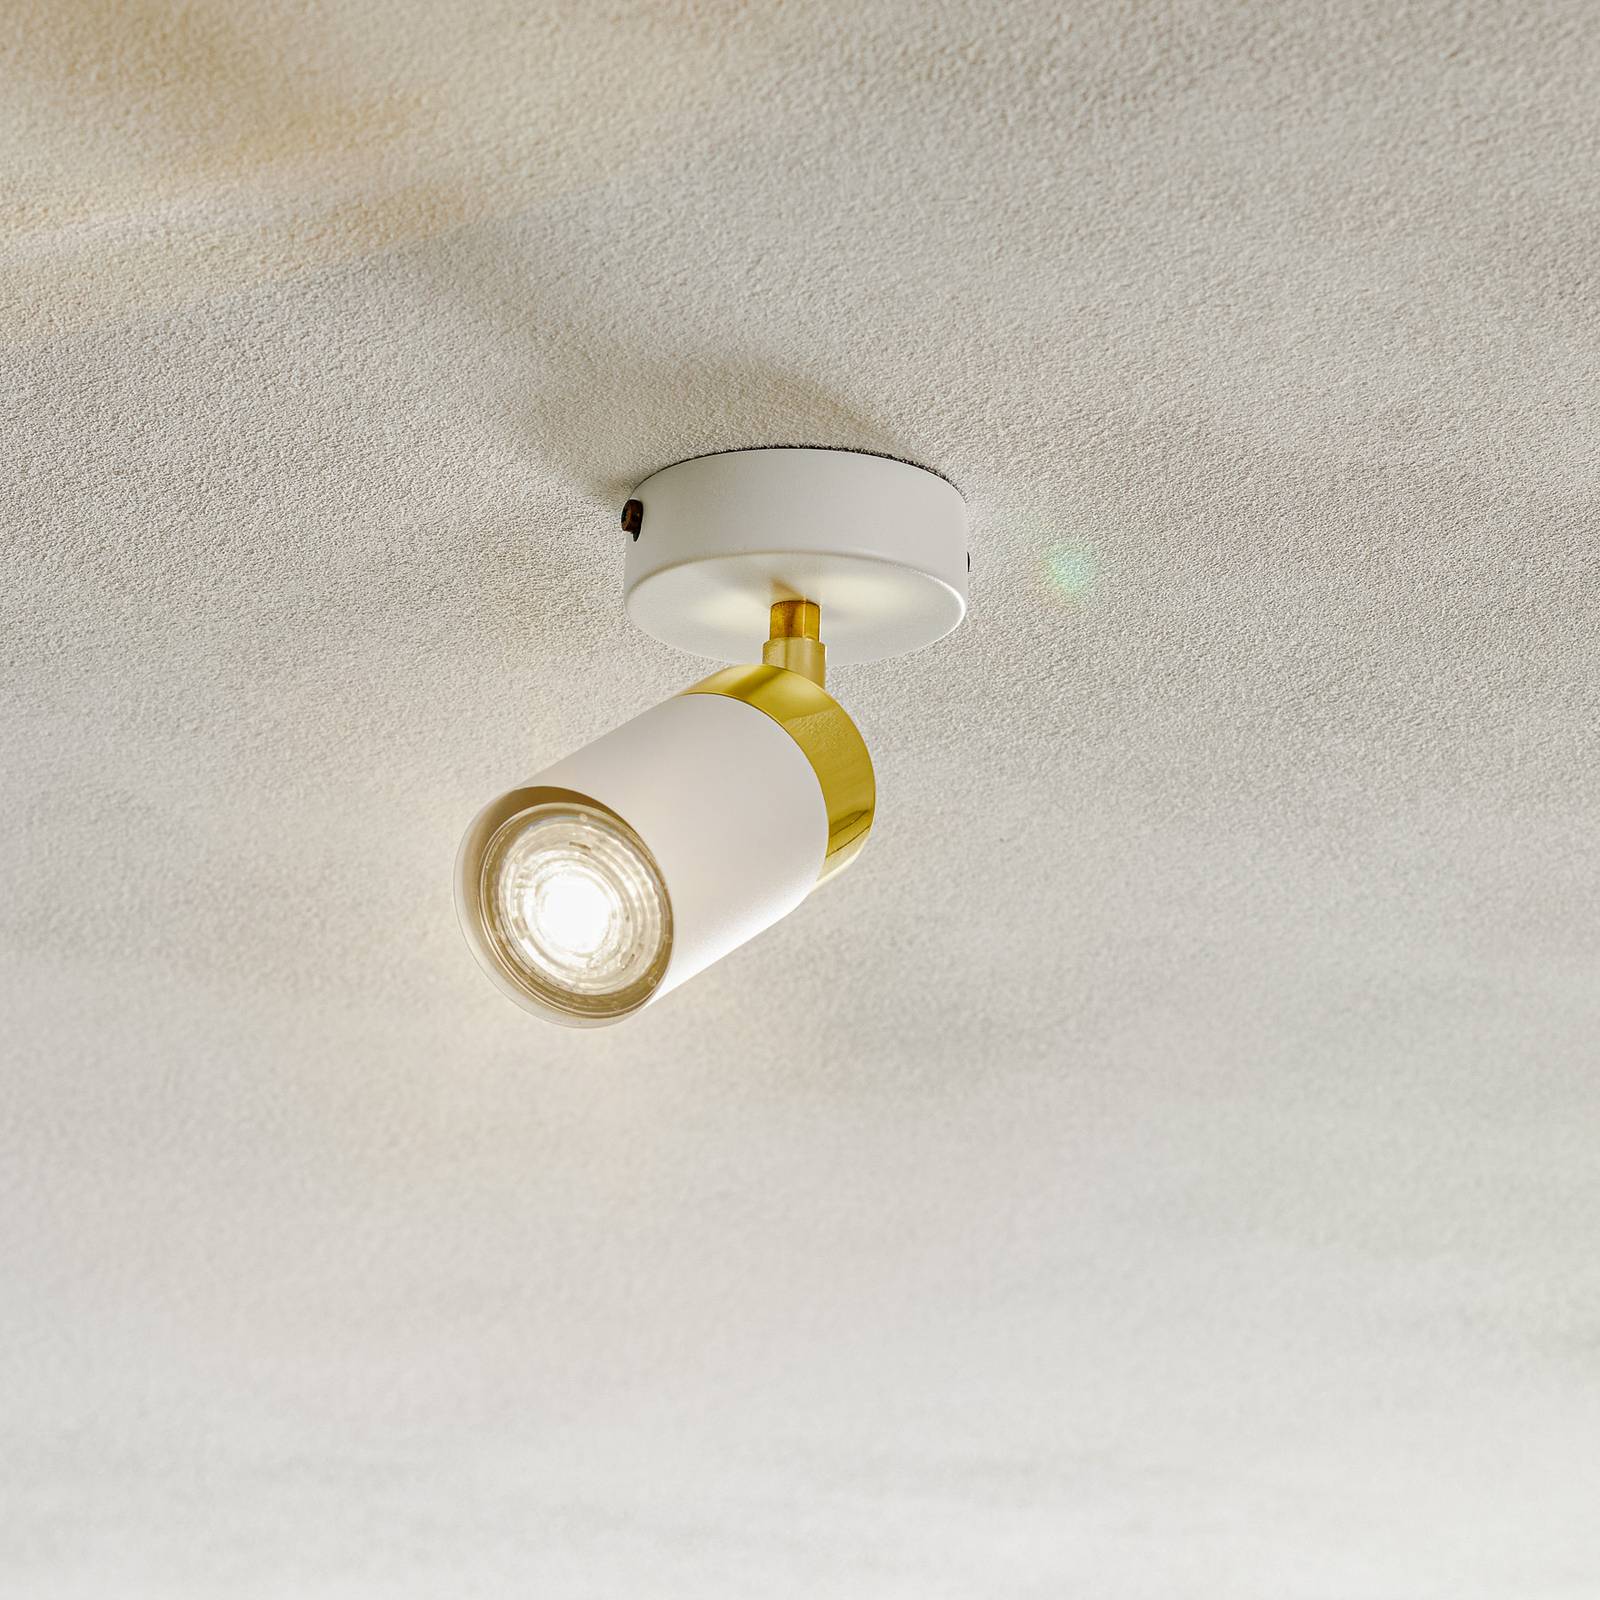 eko-light spot pour plafond joker, blanc/doré, à 1 lampe